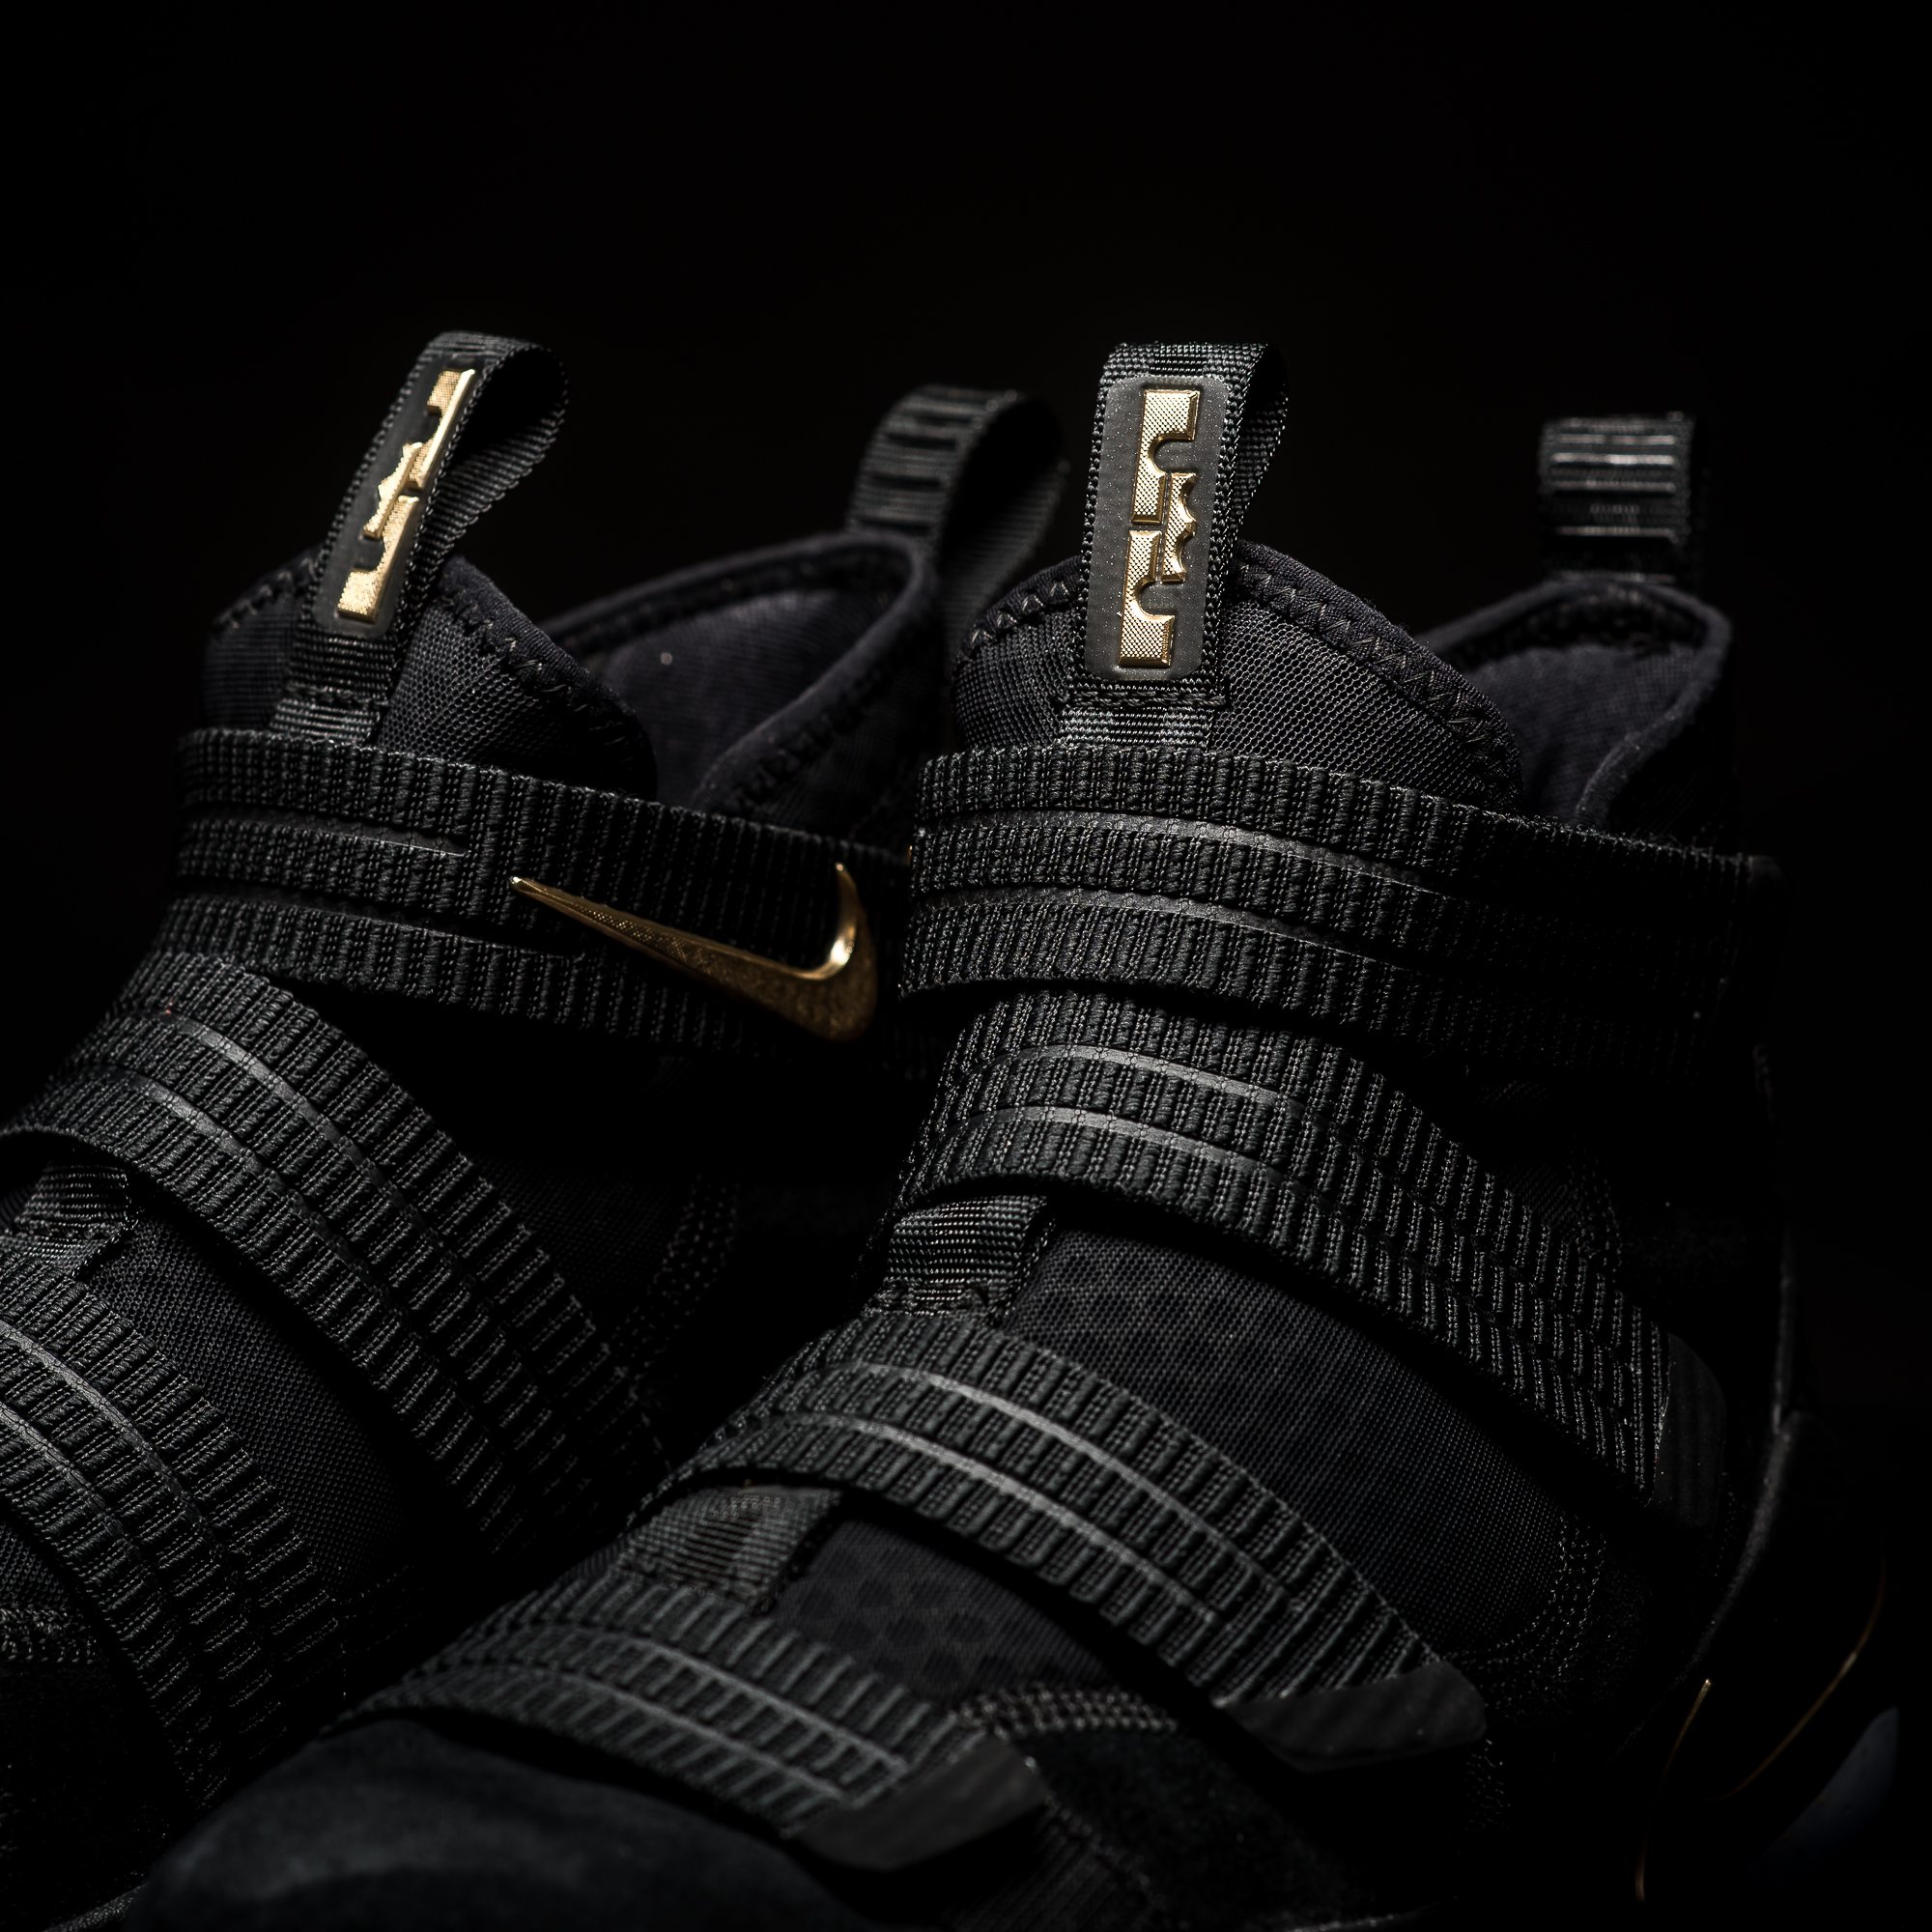 Nike LeBron Soldier XI SFG Black Metallic Gold 897646 002 sneaker politics 5 2